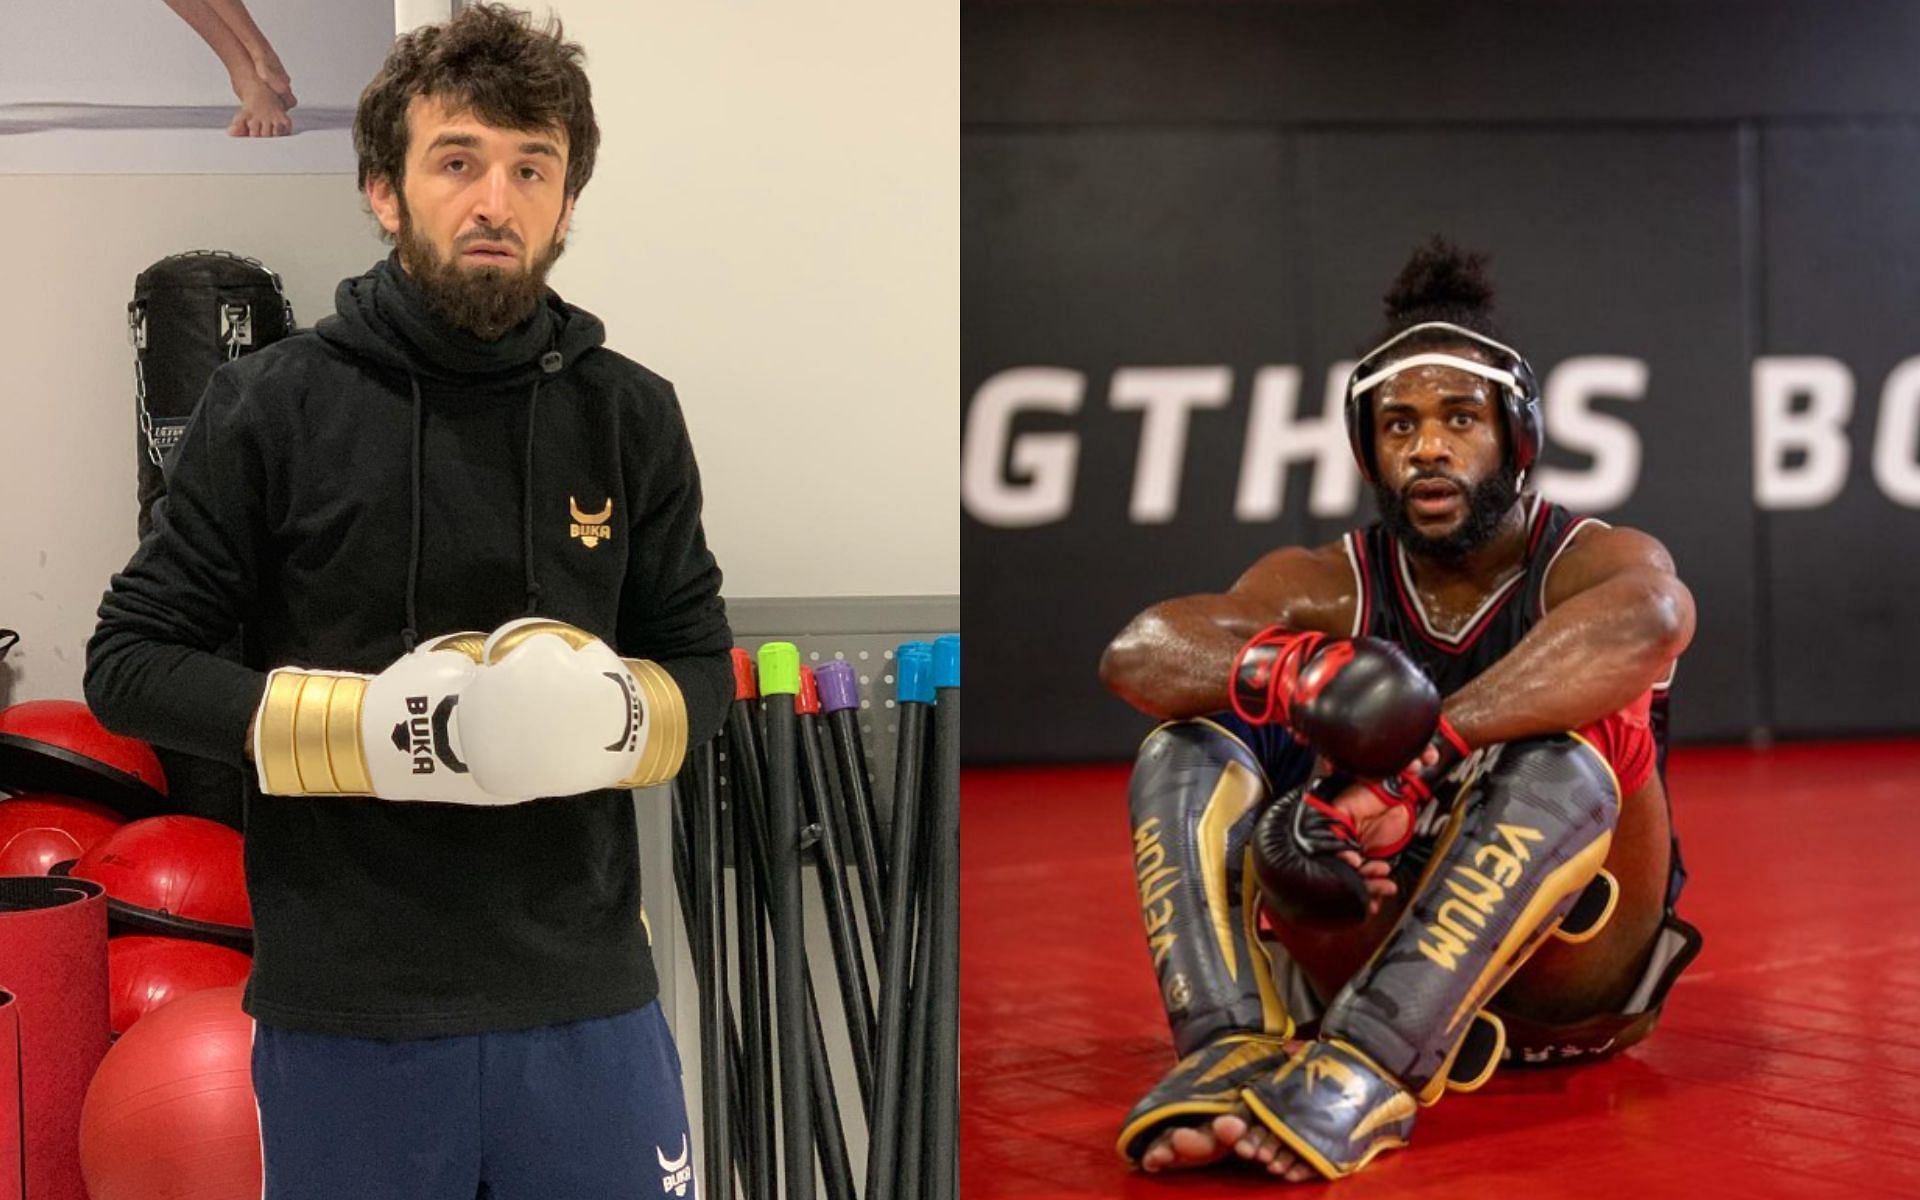 Aljamain Sterling (right) says that Zabit Magomedsharipov (left) knocked him out in training in 2017 [Images Courtesy: @zabit_magomedovsharipov and @funkmastermma on Instagram]